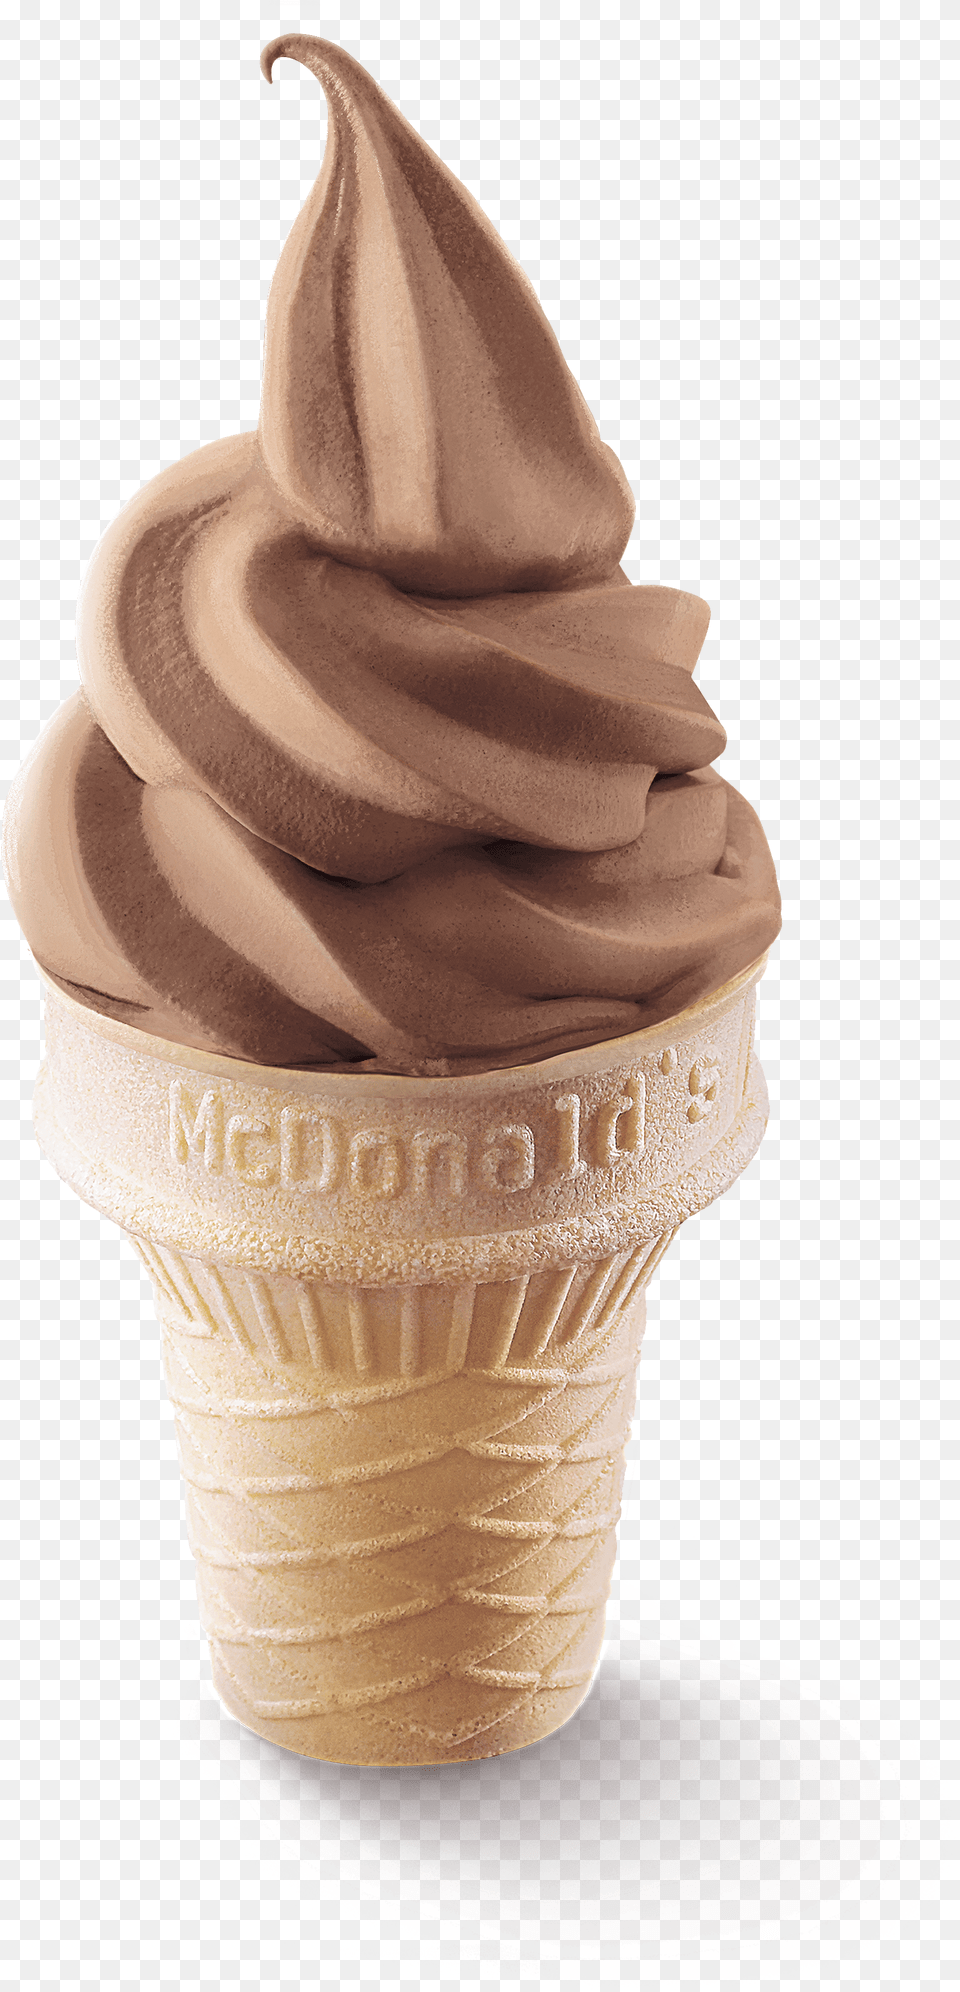 Mcdonald Ice Cream Chocolate, Dessert, Food, Ice Cream, Soft Serve Ice Cream Png Image